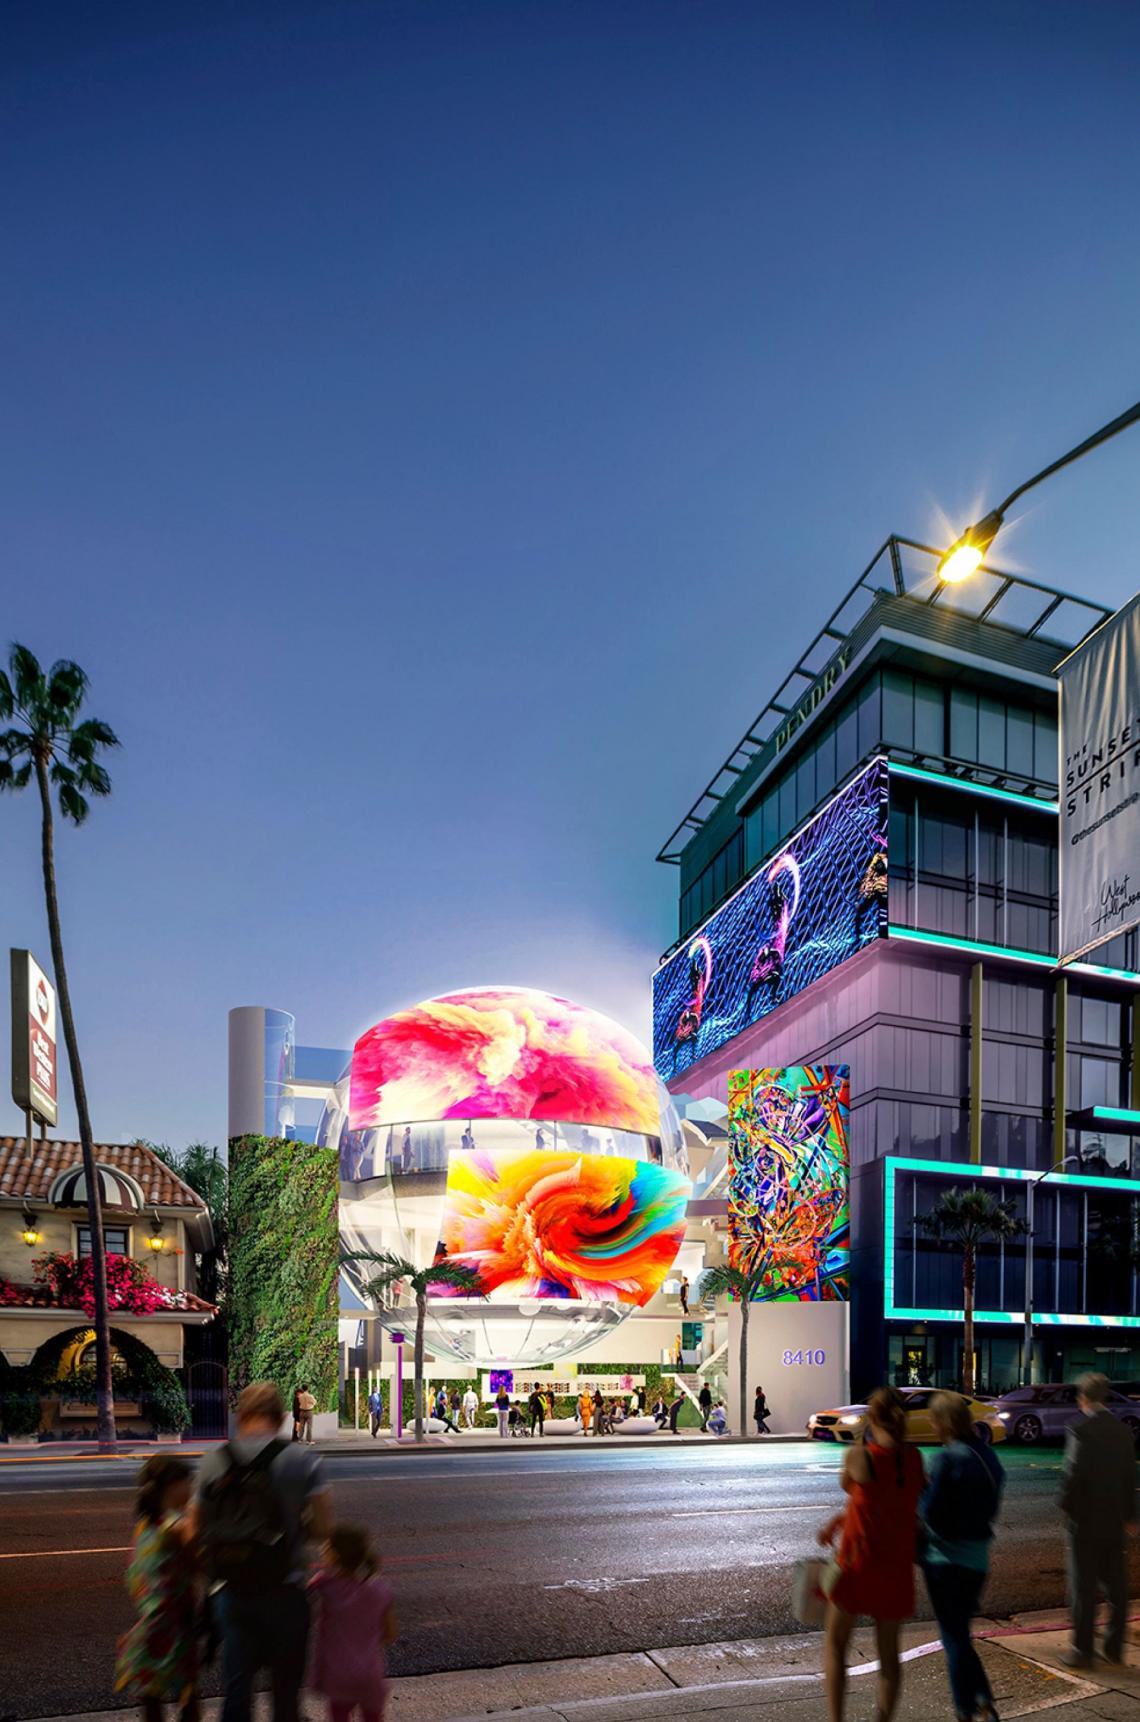 Monochrome Hollywood Regency Flip Behind the Sunset Strip Asking $7 Million  - Curbed LA